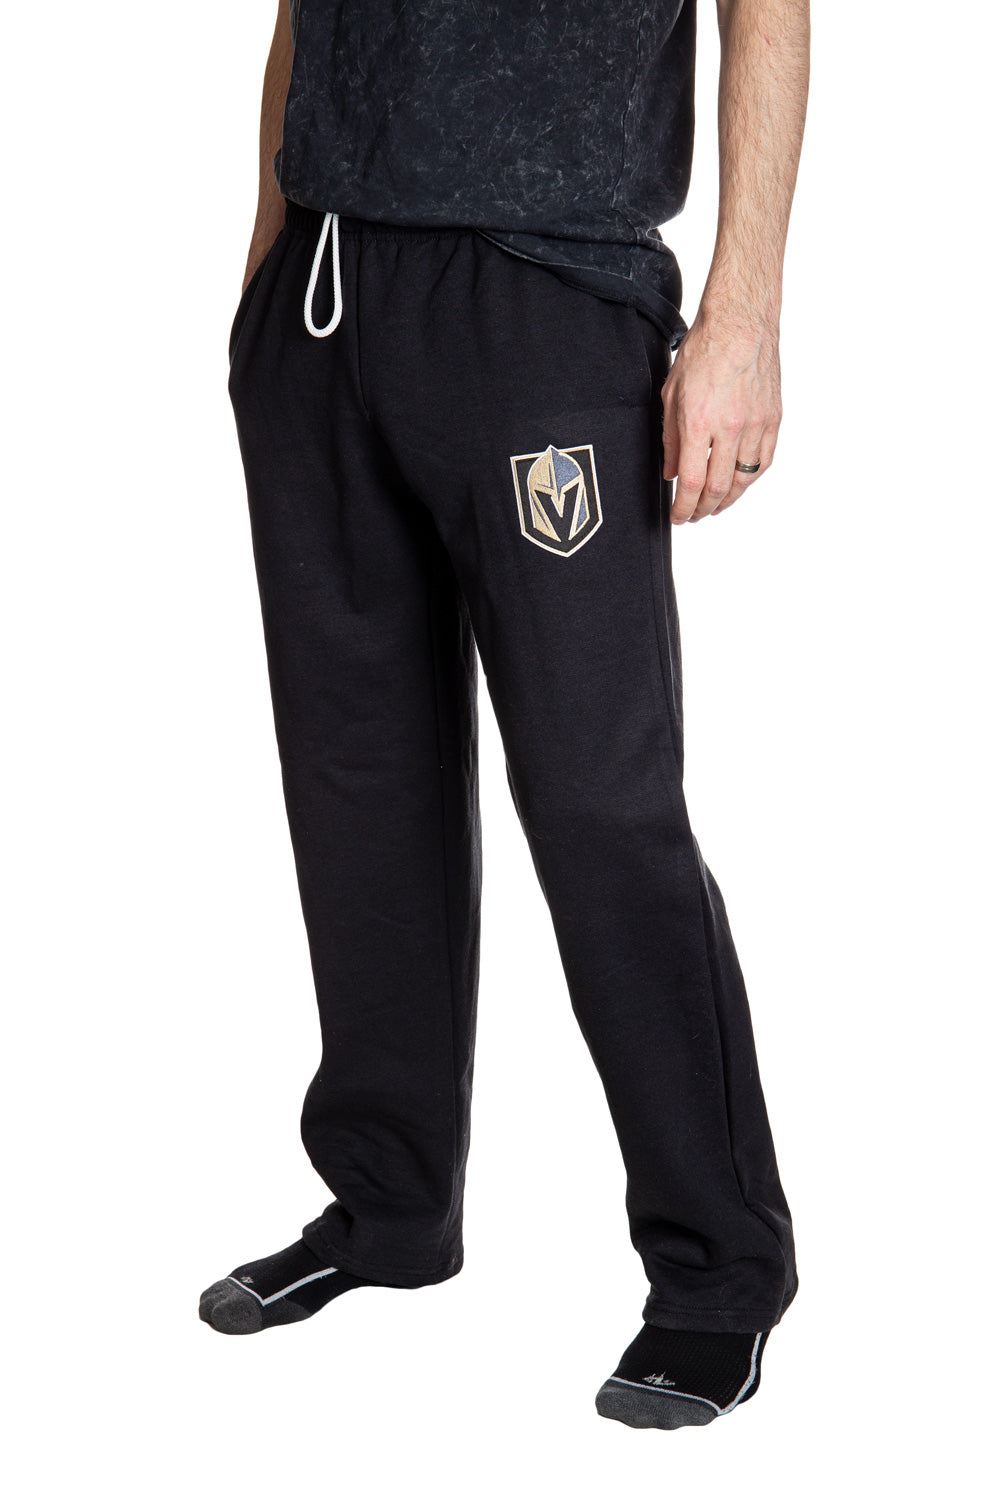 Vegas Golden Knights Premium Fleece Sweatpants Side View of Embroidered Logo.